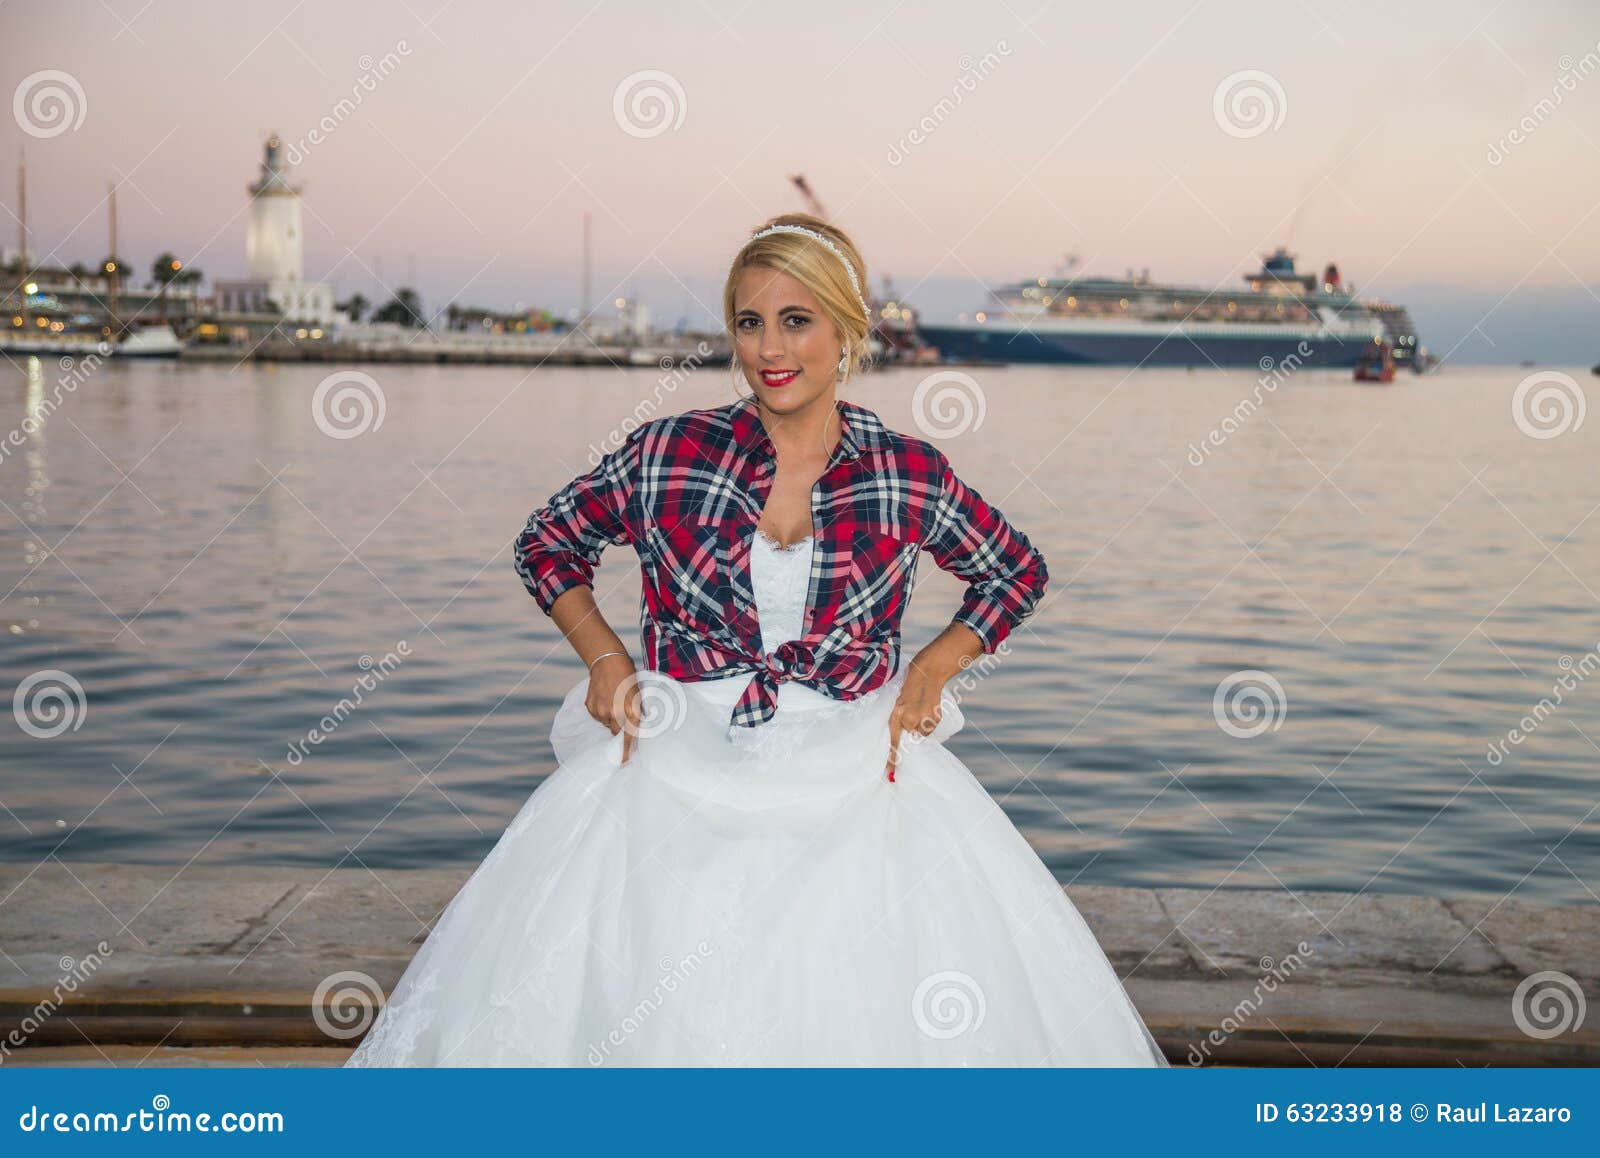 wedding dress with plaid shirt